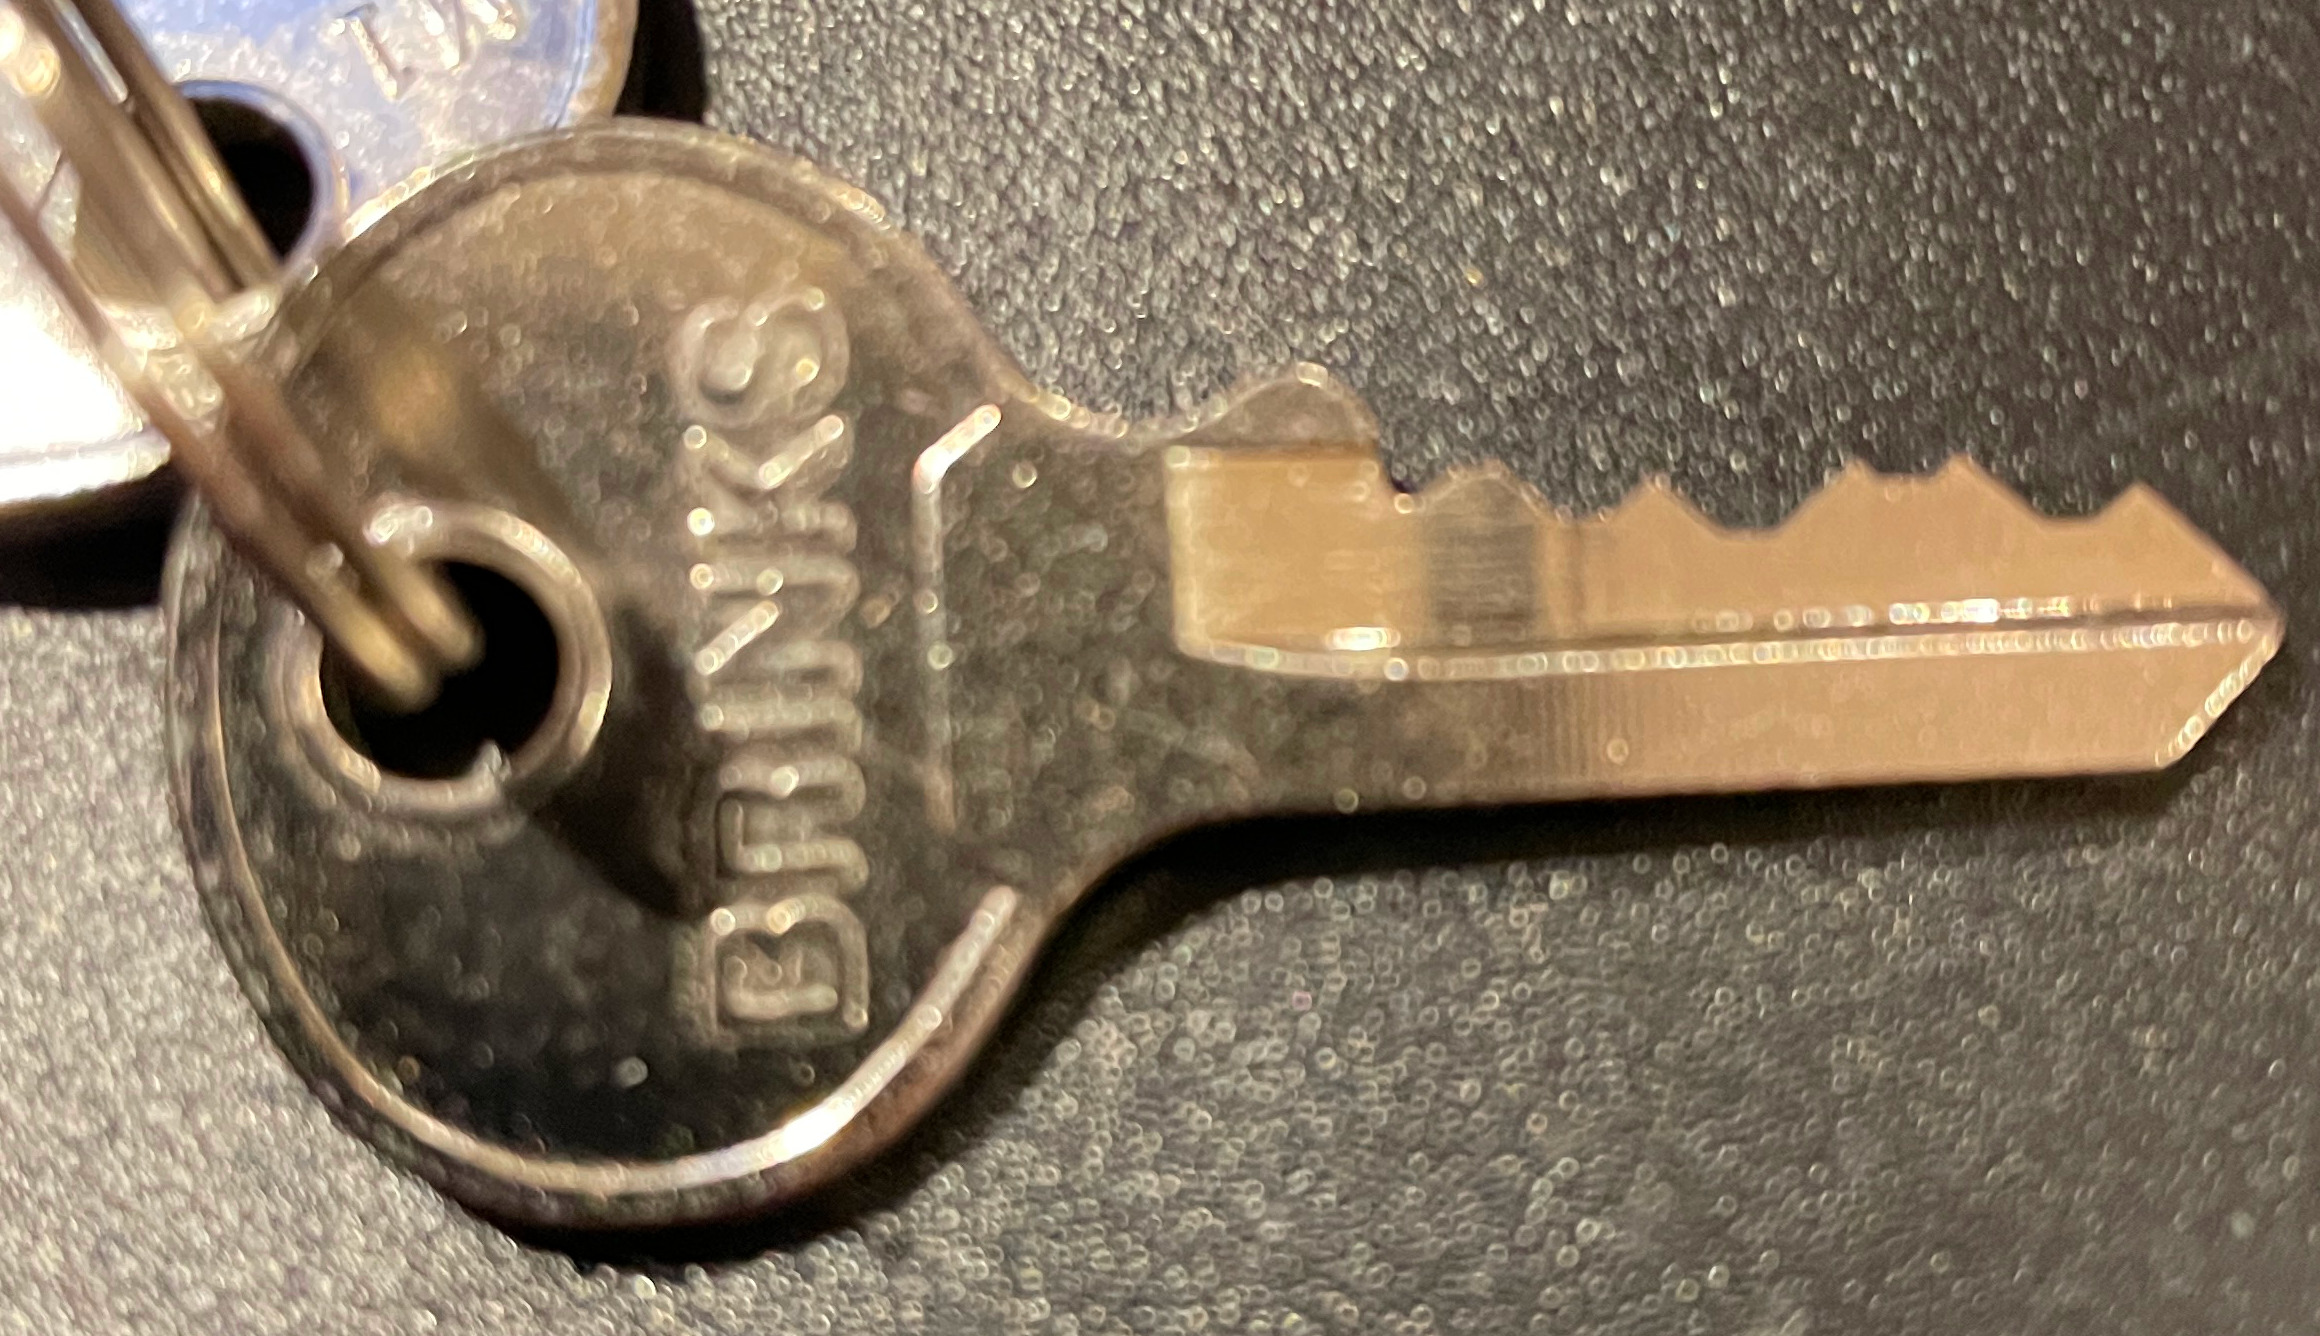 Brinks 40mm key